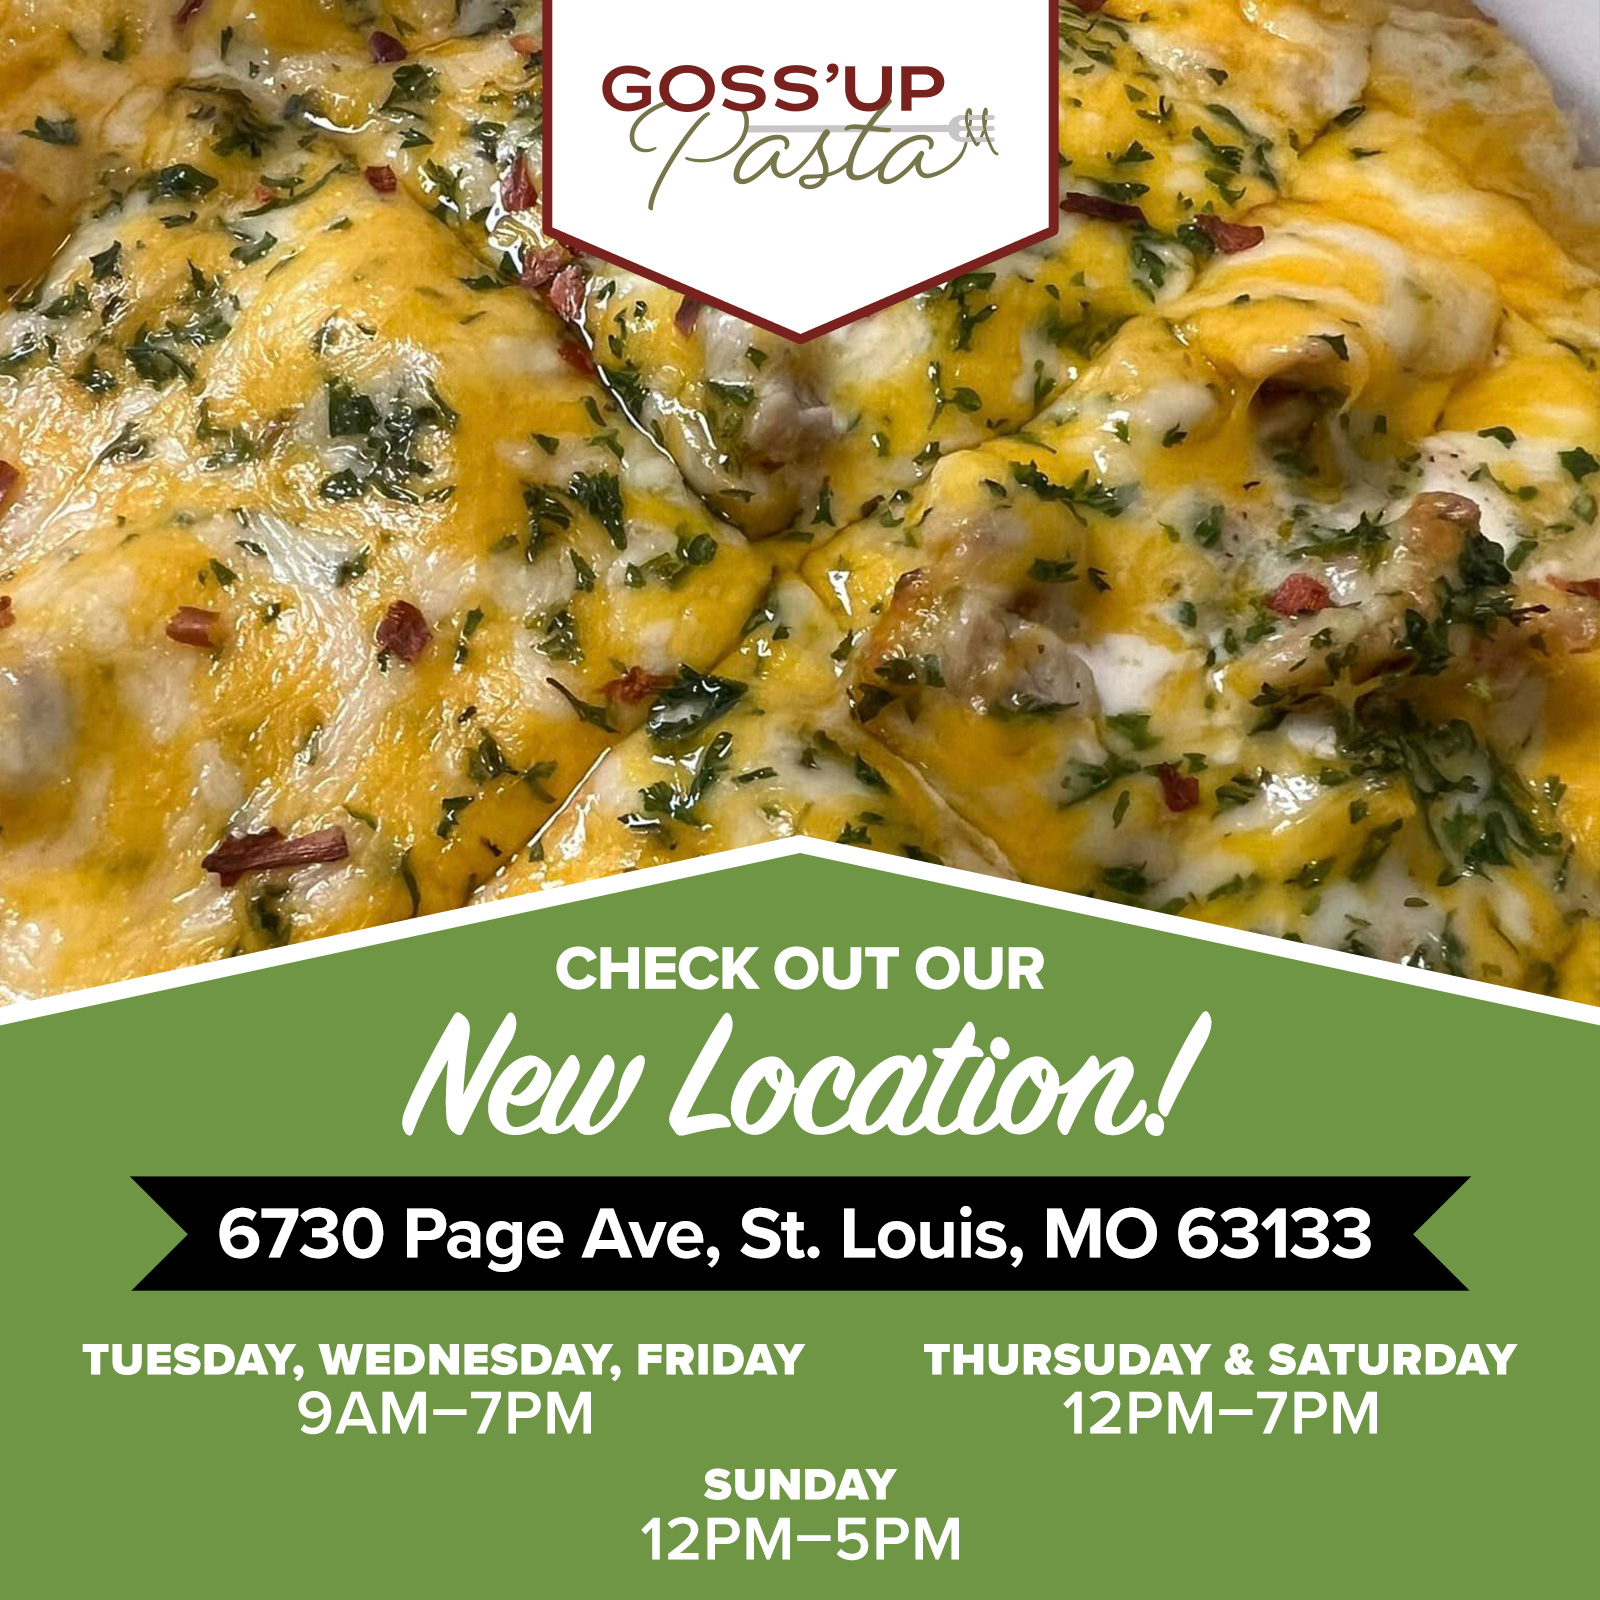 Goss'up Pasta - New Location